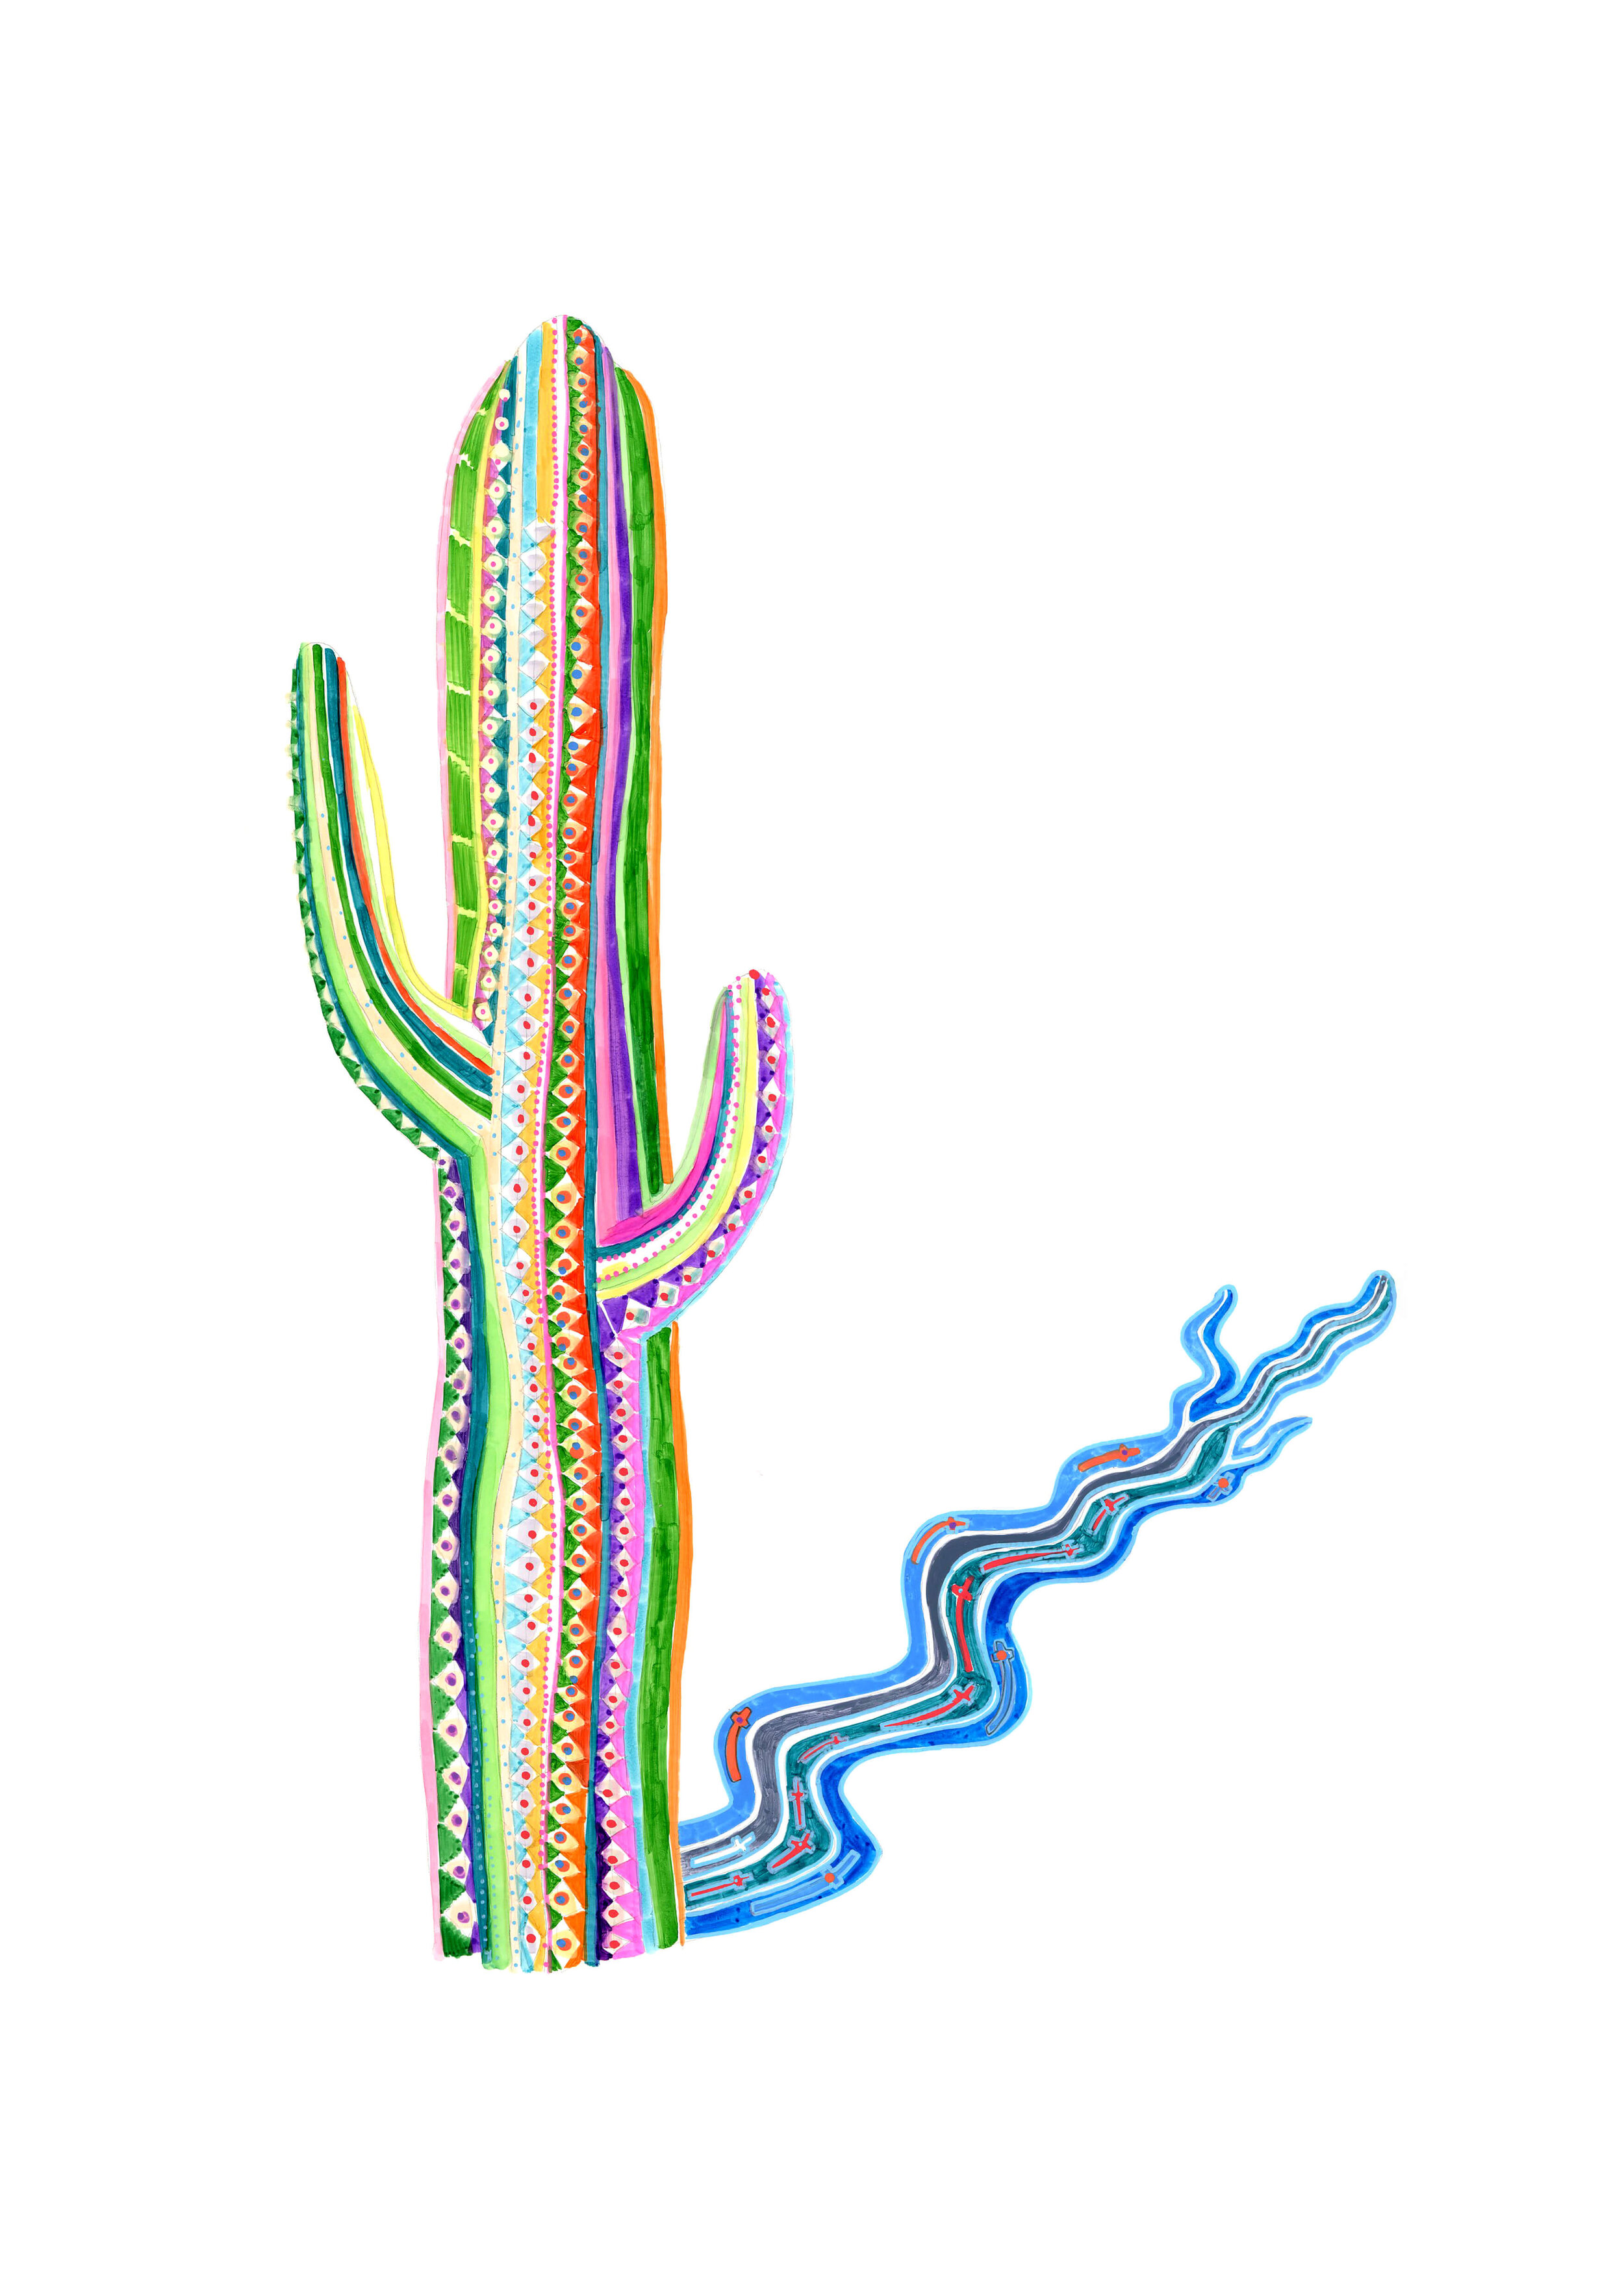 Cactus Wobble219.jpg